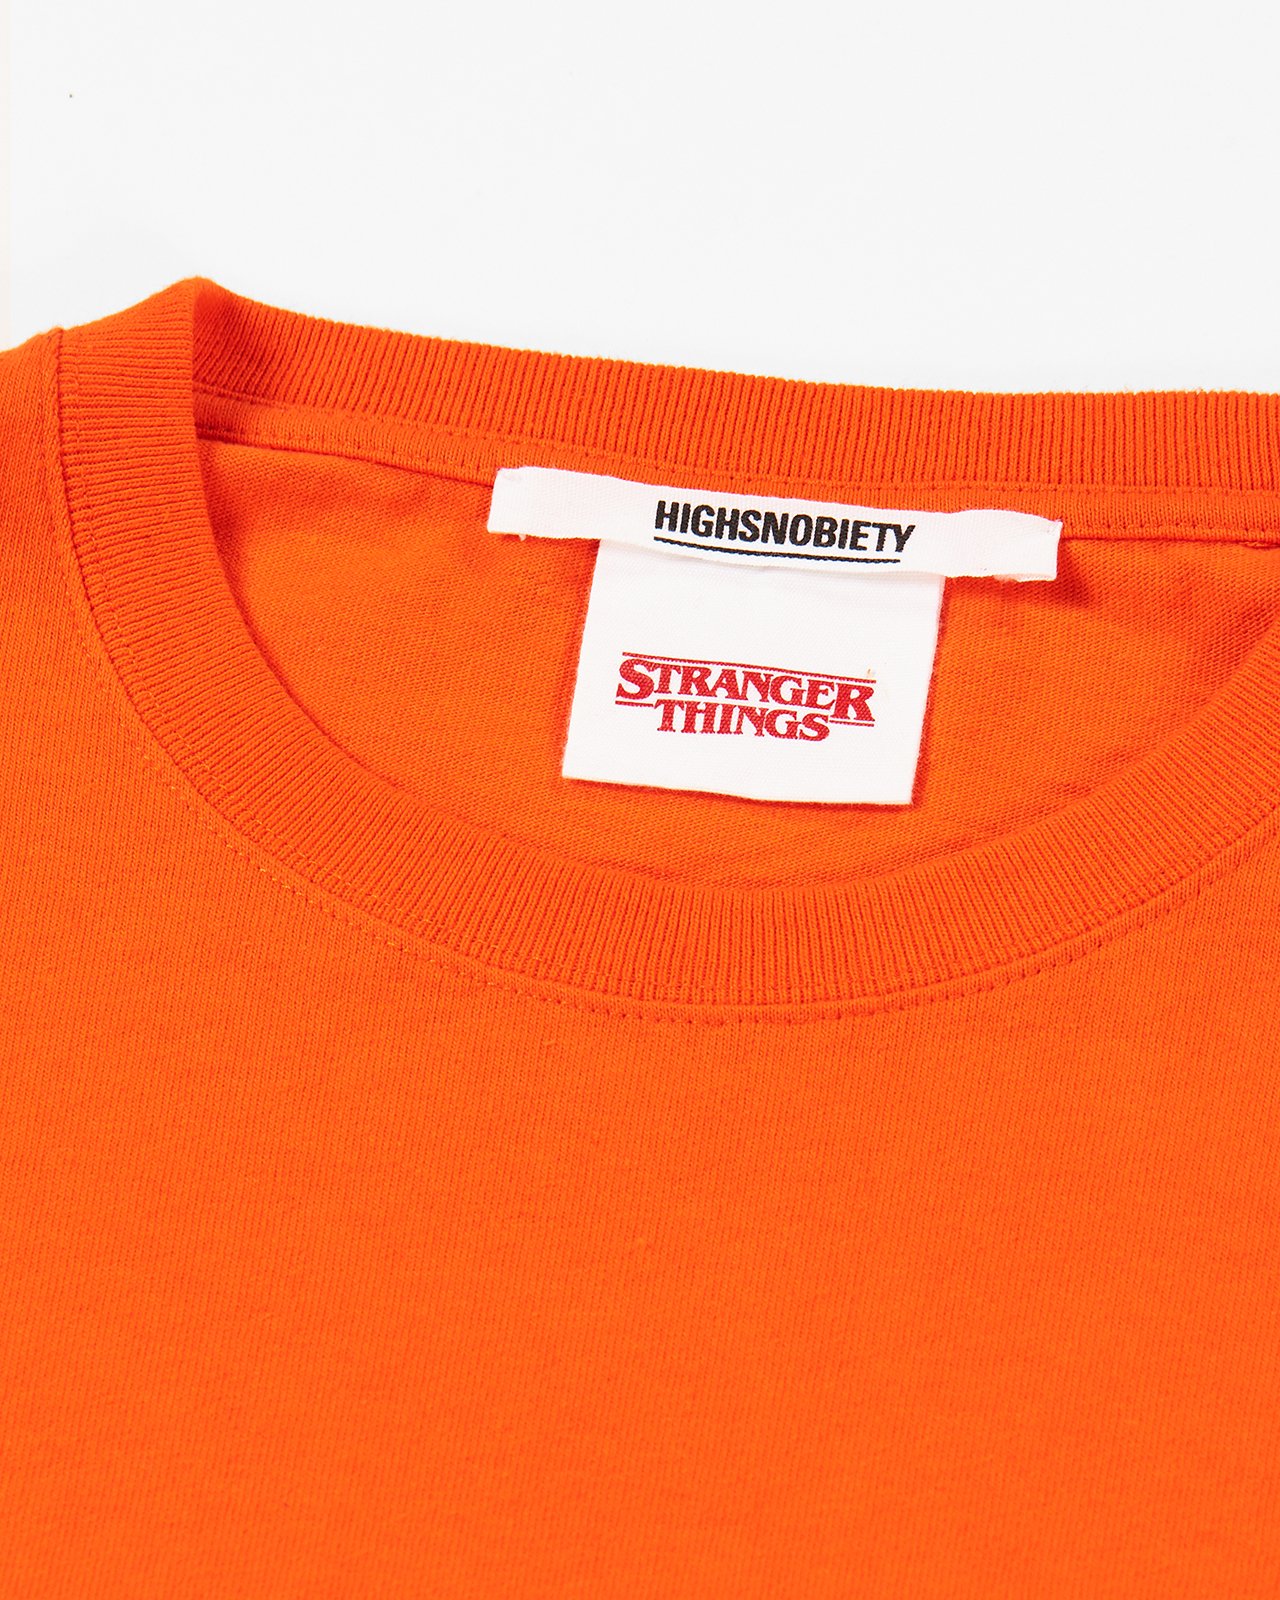 Highsnobiety - Stranger Things Hawkins Lonsleeve Orange - Clothing - Red - Image 3